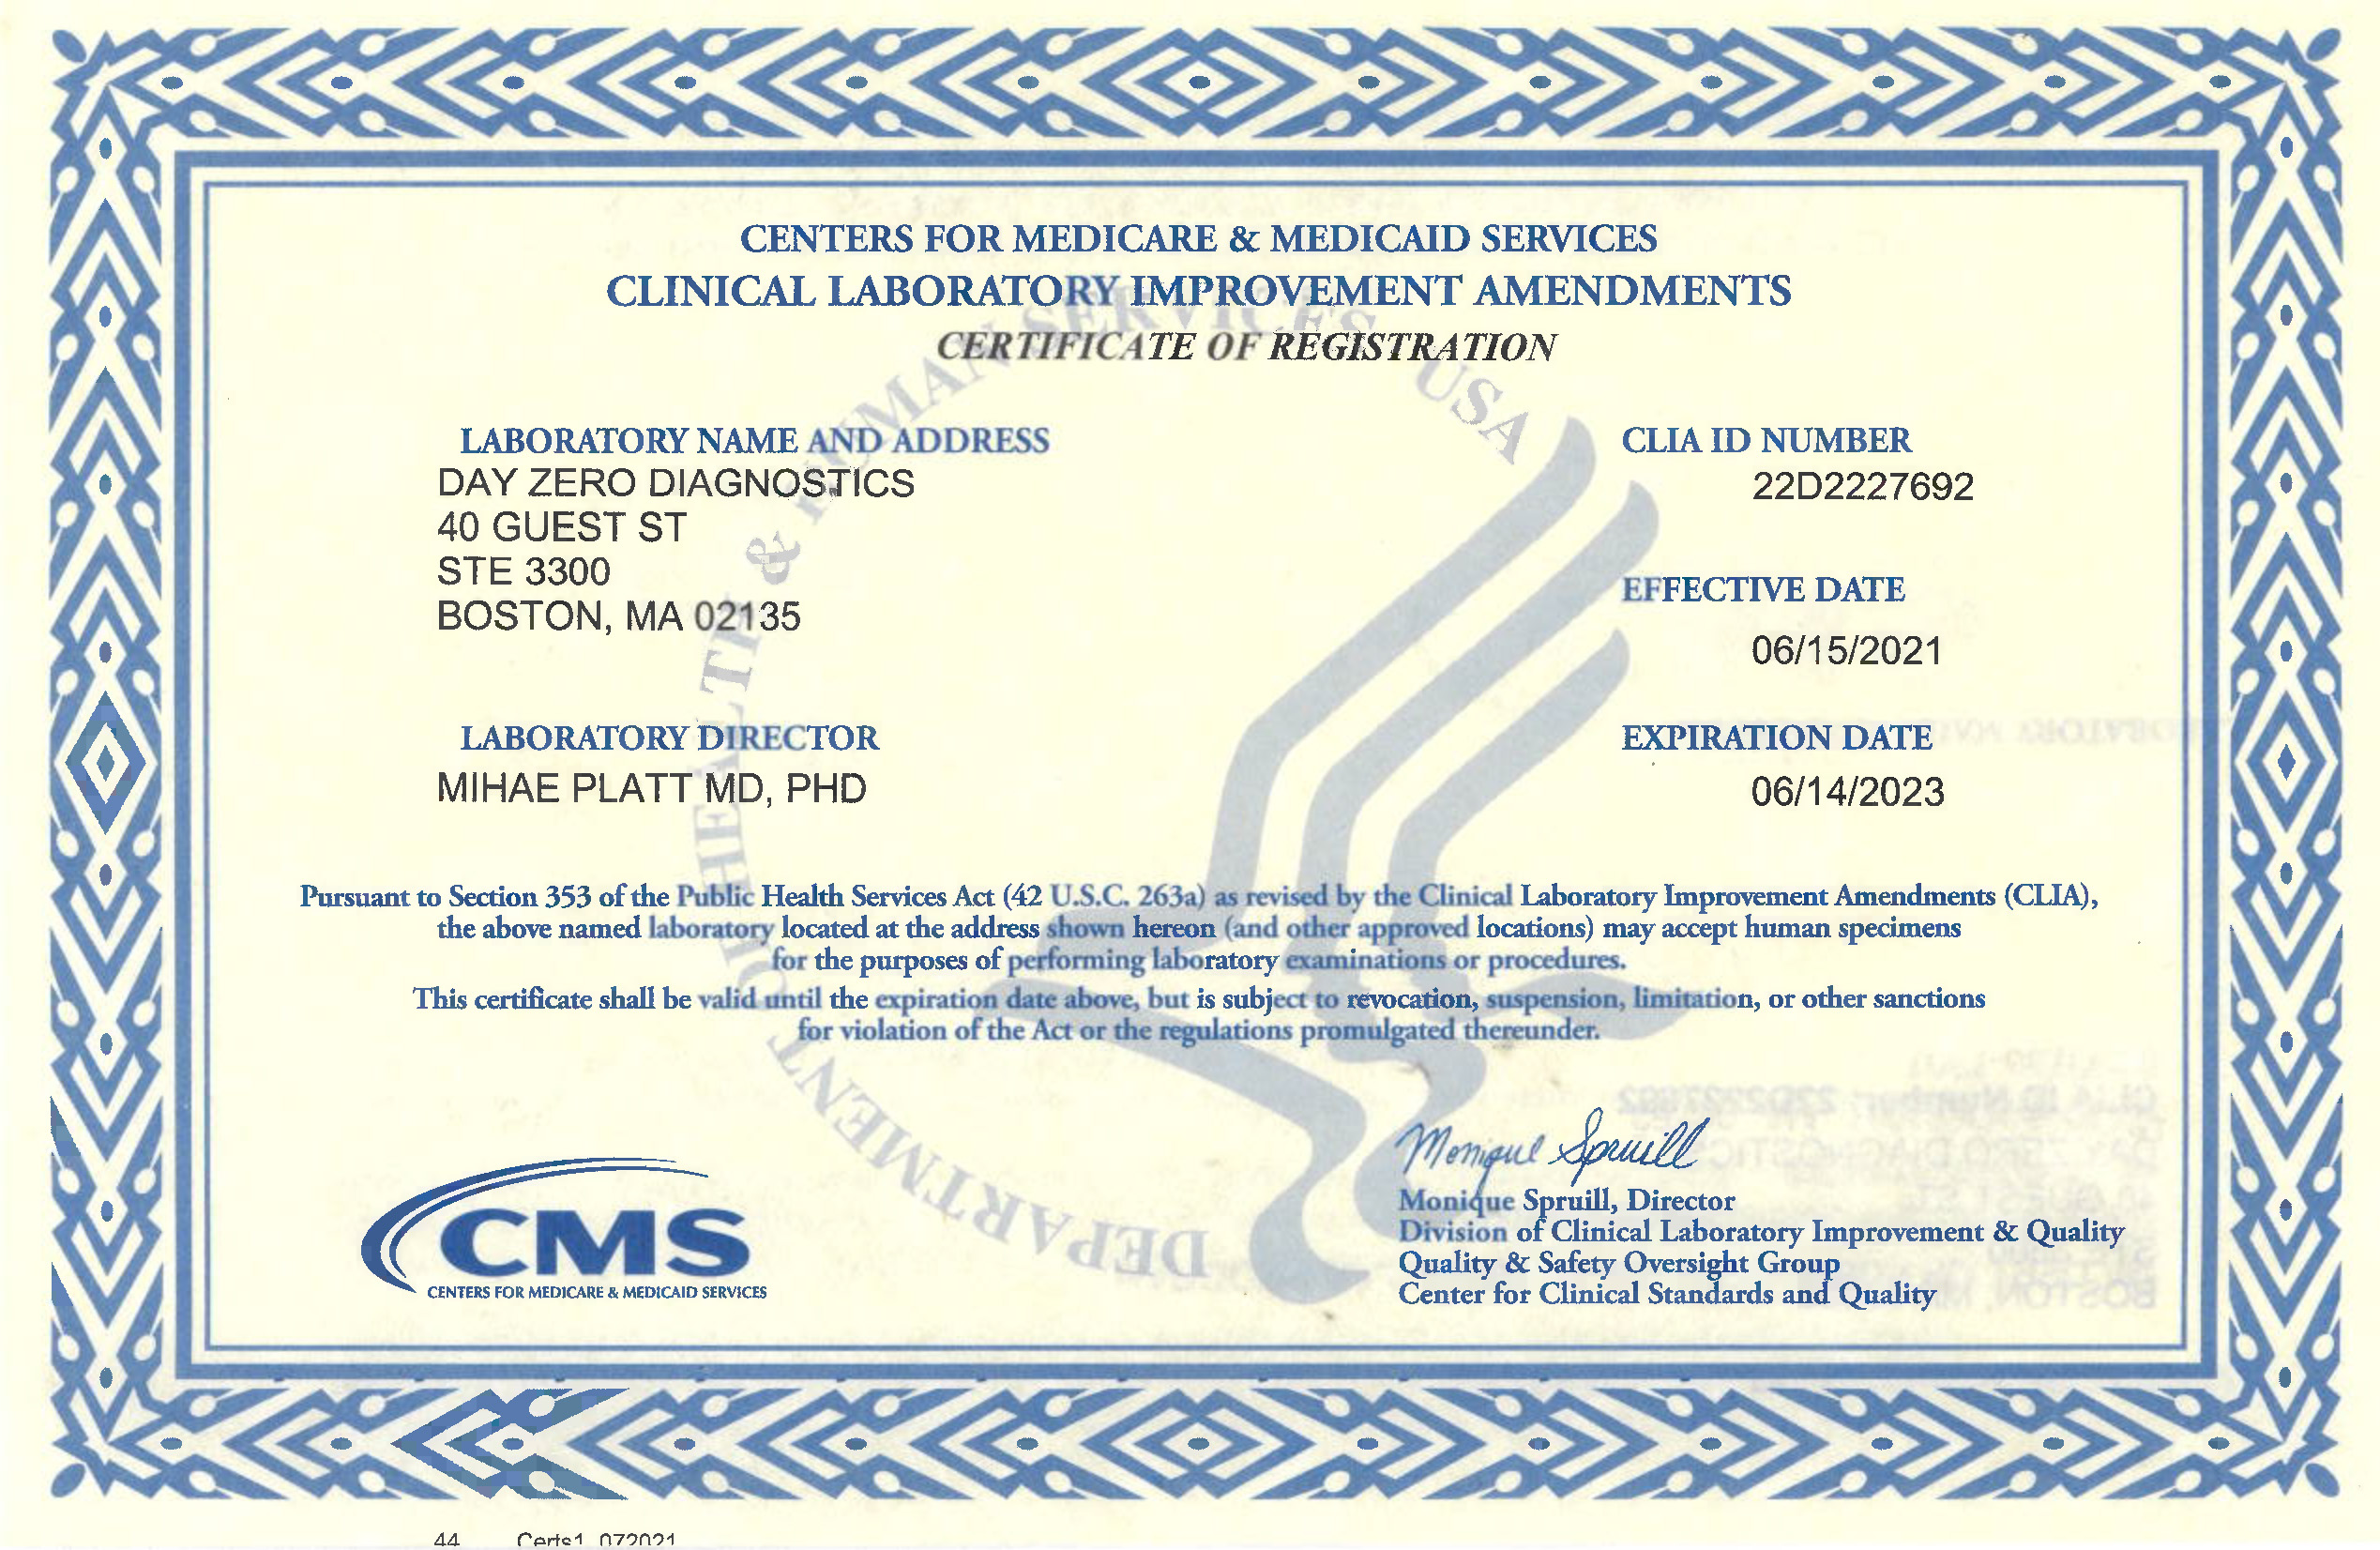 DZD CLIA Certificate of Registration